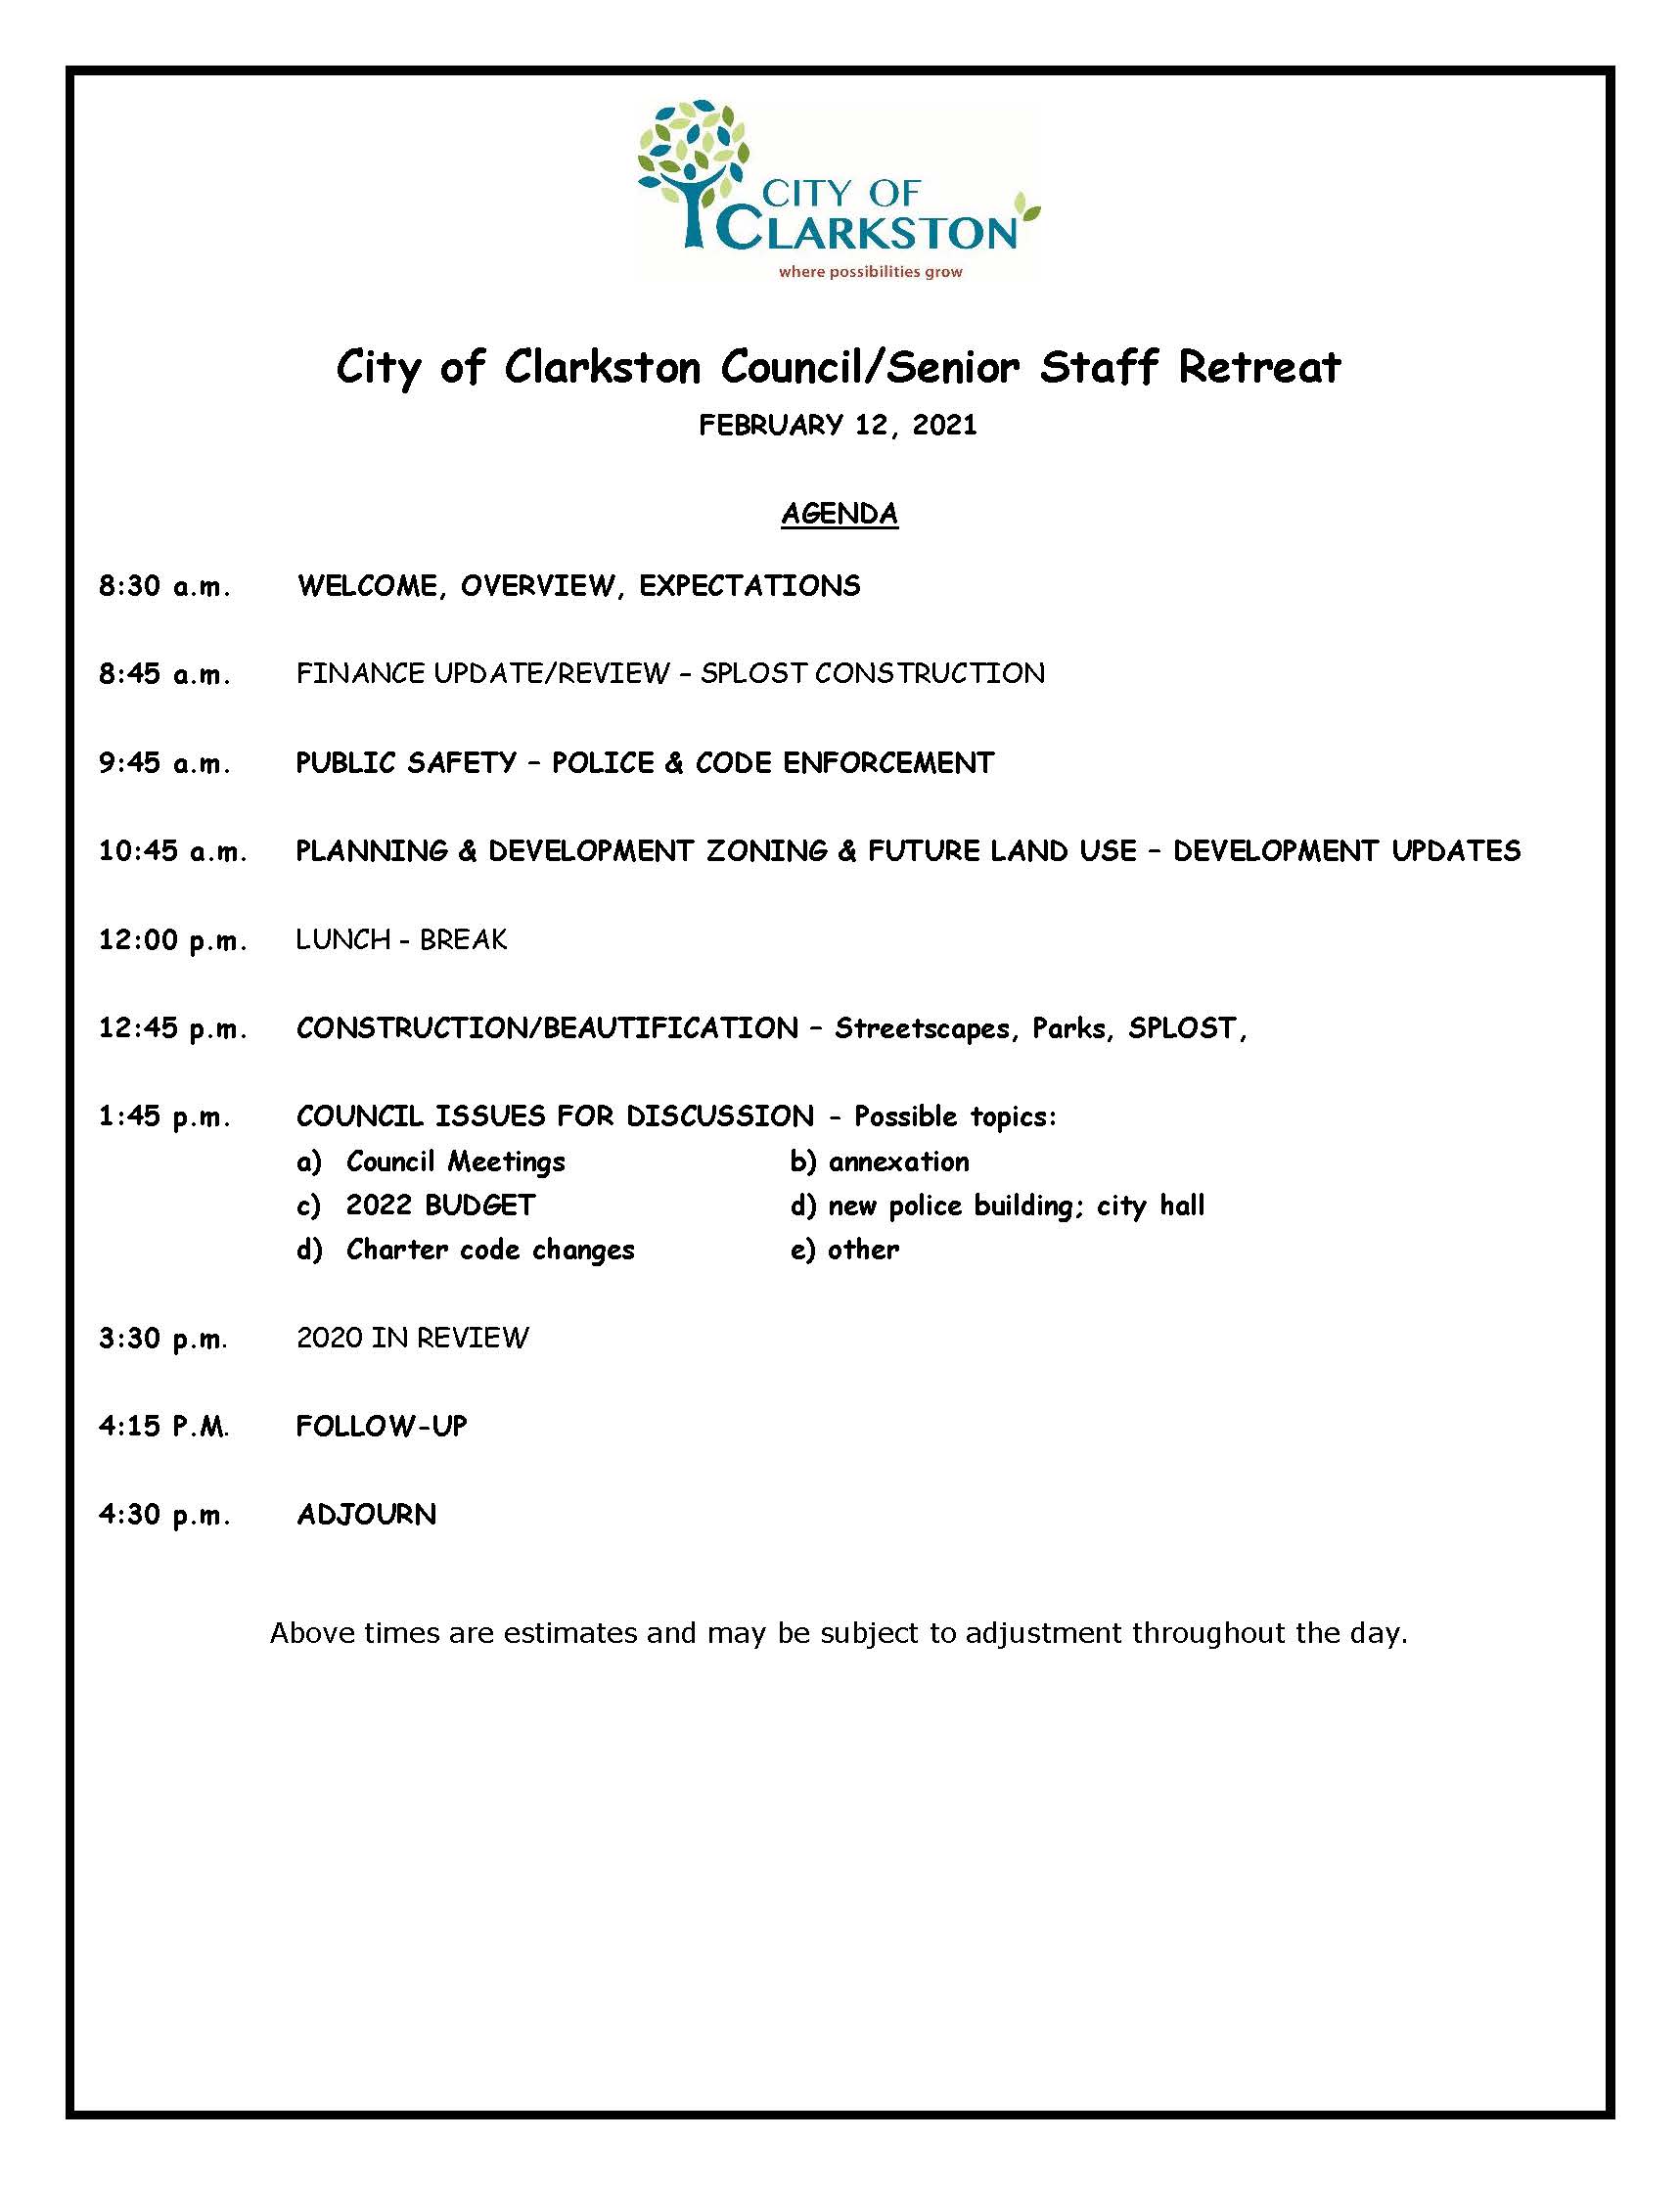 council/senior staff agenda 